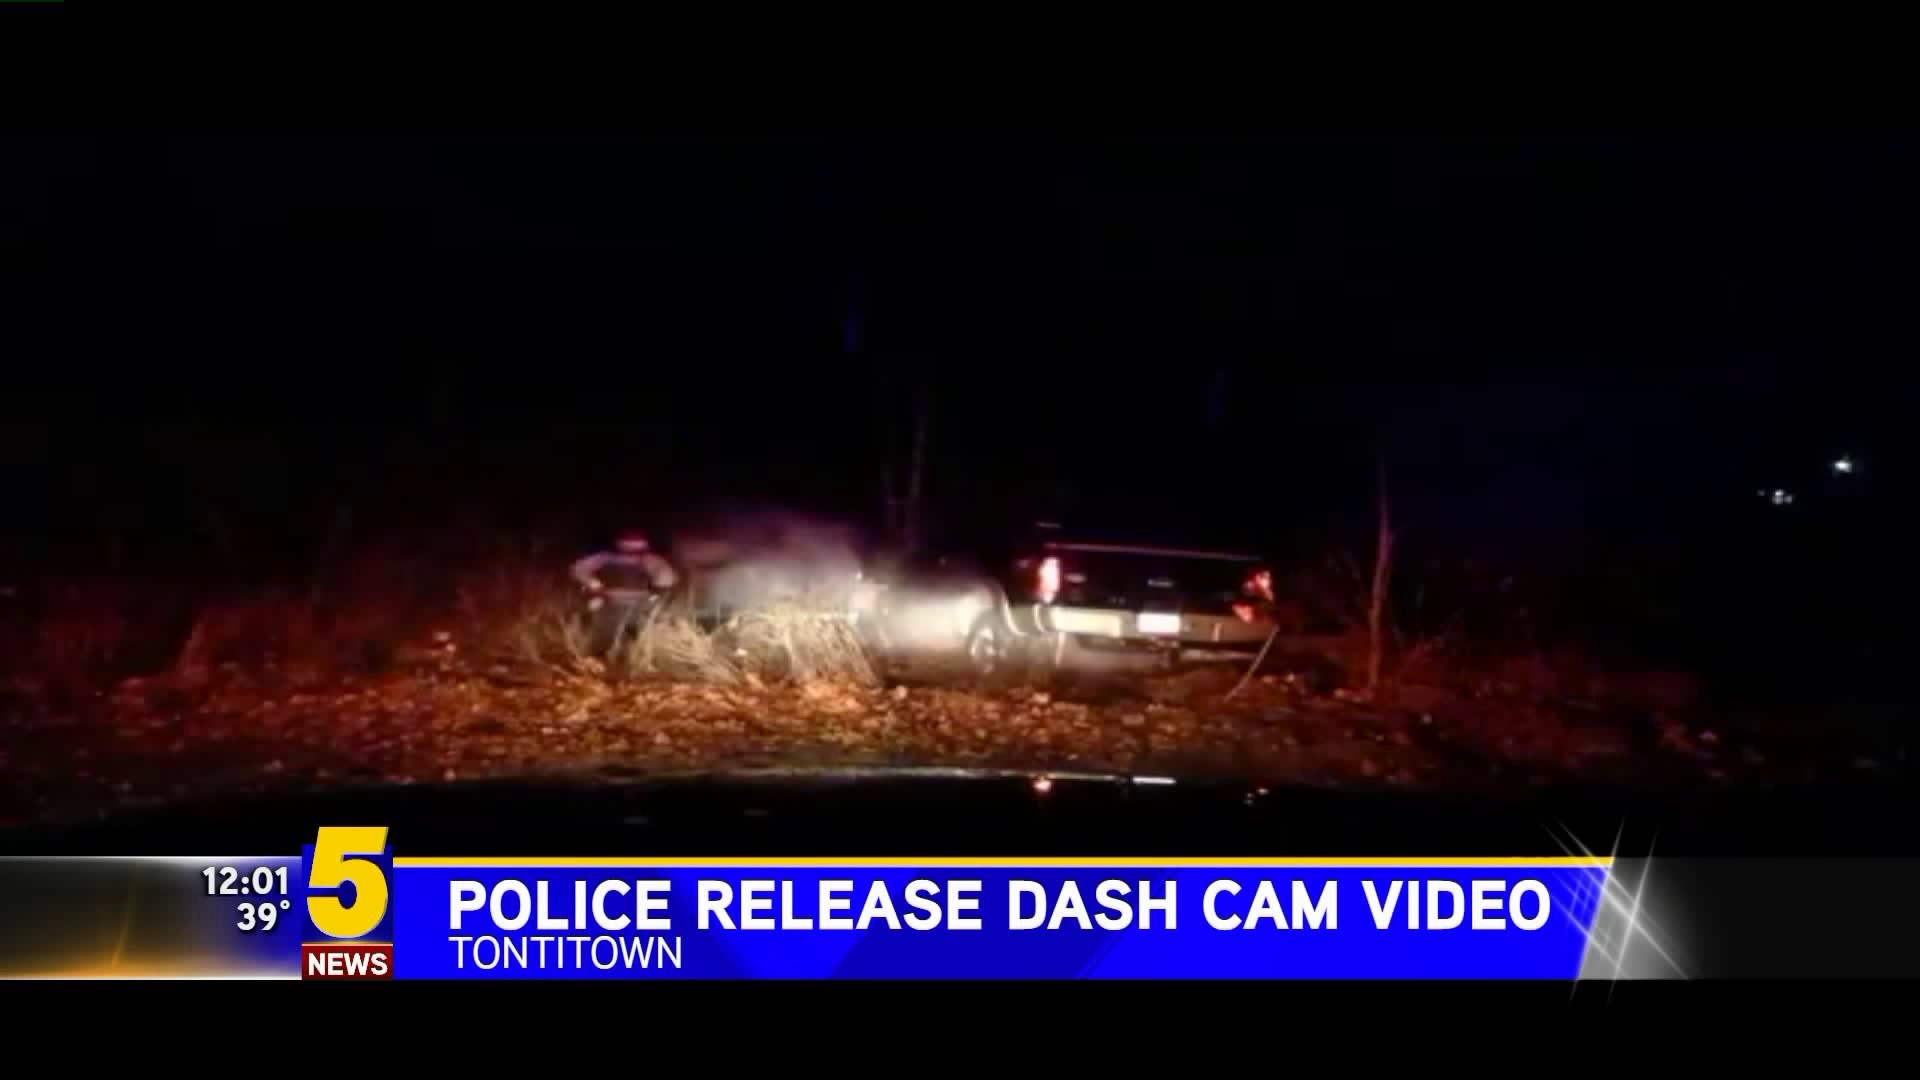 Police Release Dash Cam Video